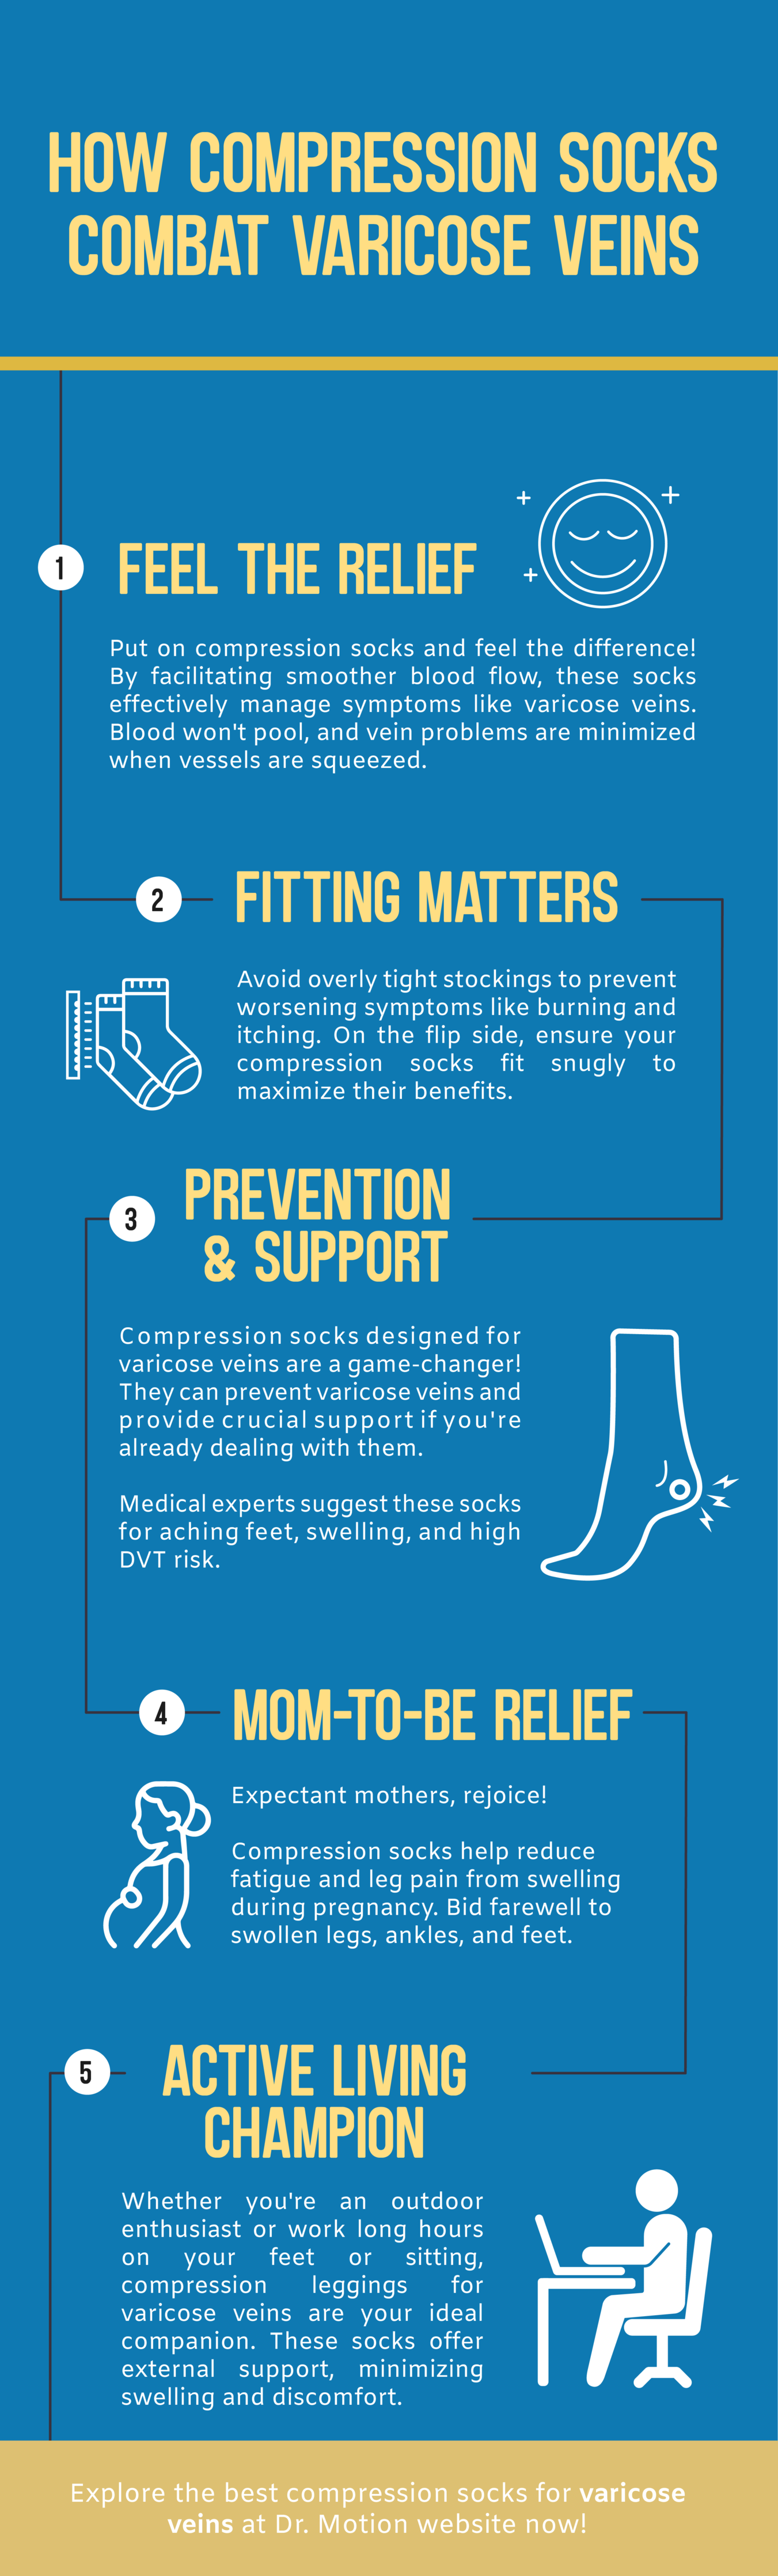 How Compression Socks Help Prevent Varicose Veins